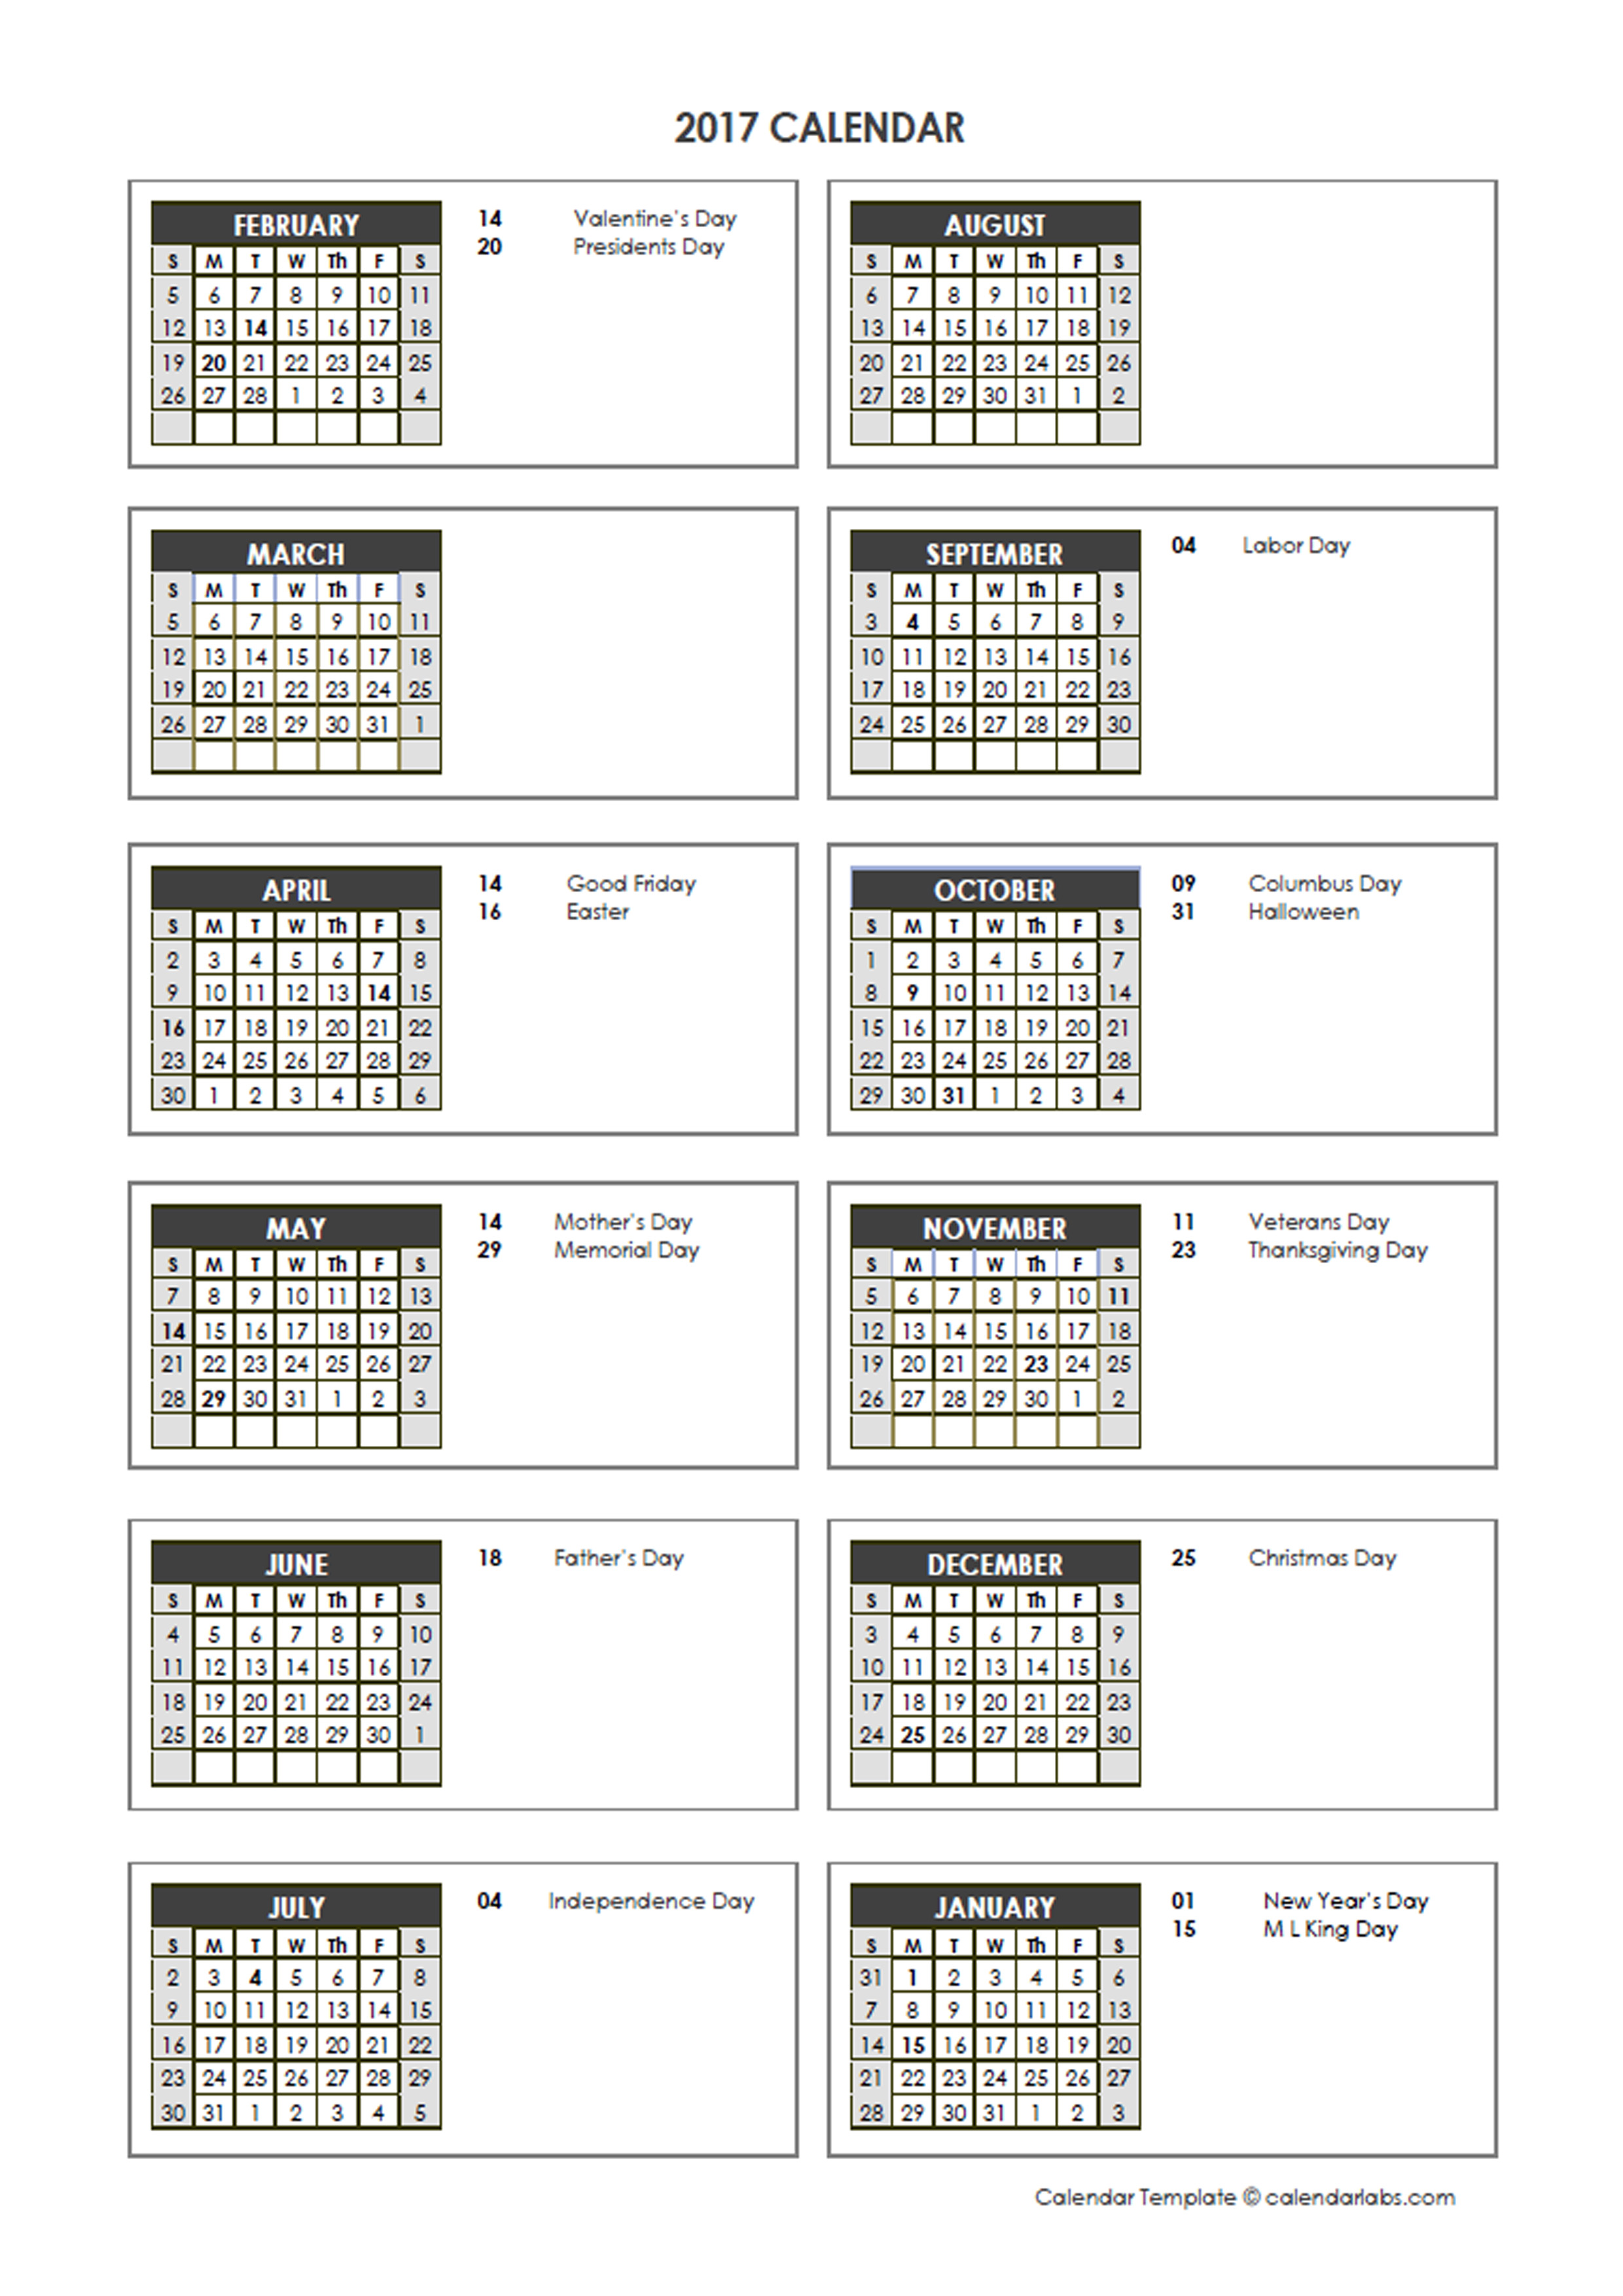 2017 Accounting Close Calendar 4-4-5 - Free Printable Templates2480 x 3508